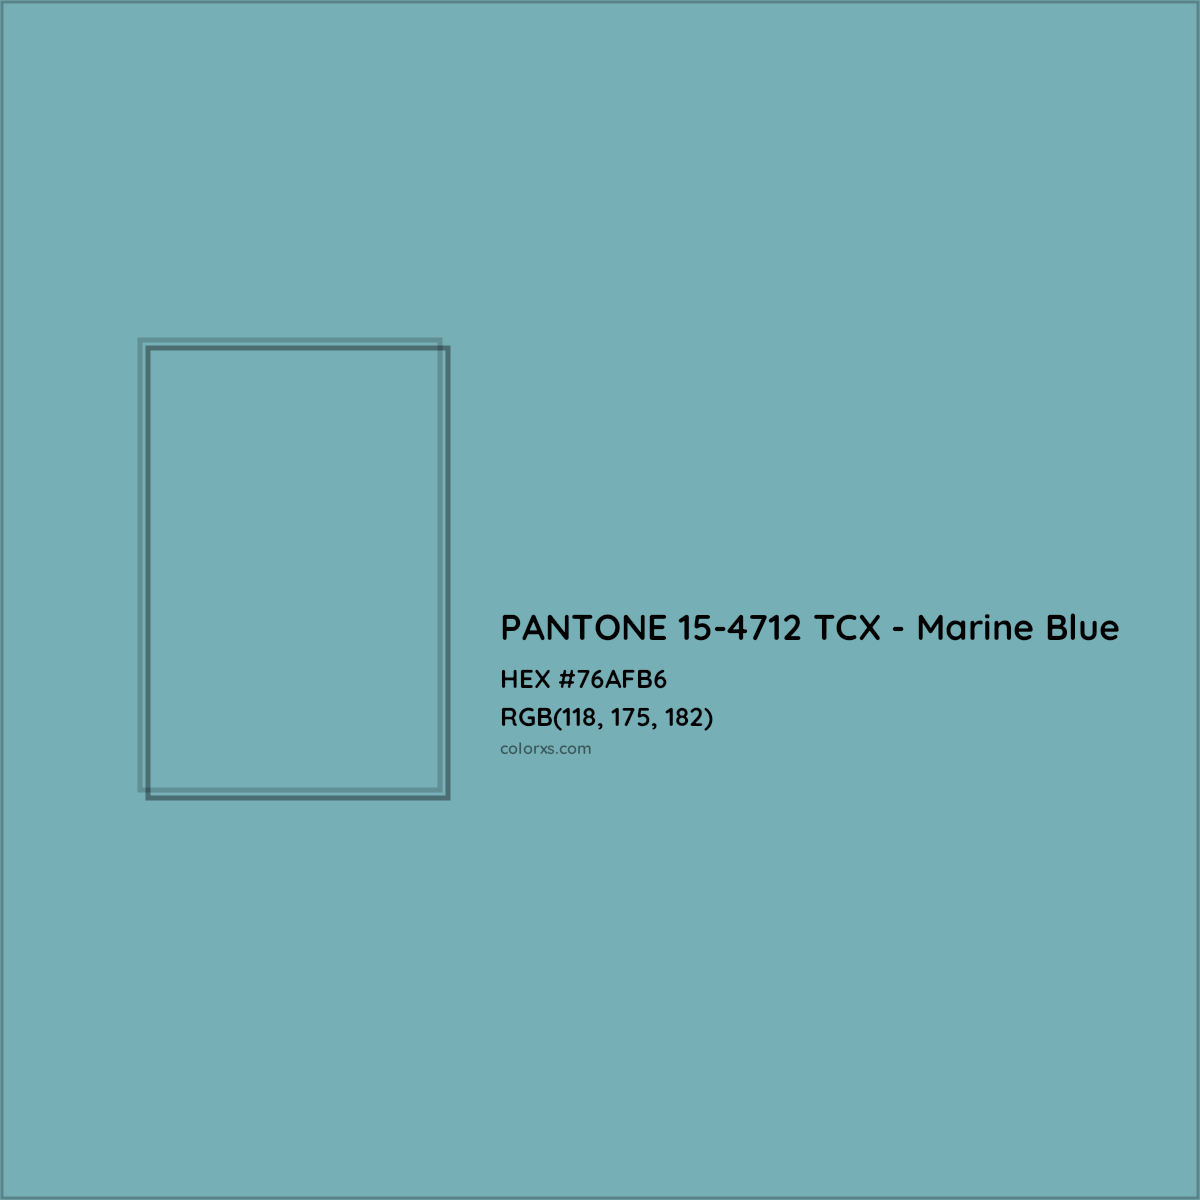 HEX #76AFB6 PANTONE 15-4712 TCX - Marine Blue CMS Pantone TCX - Color Code